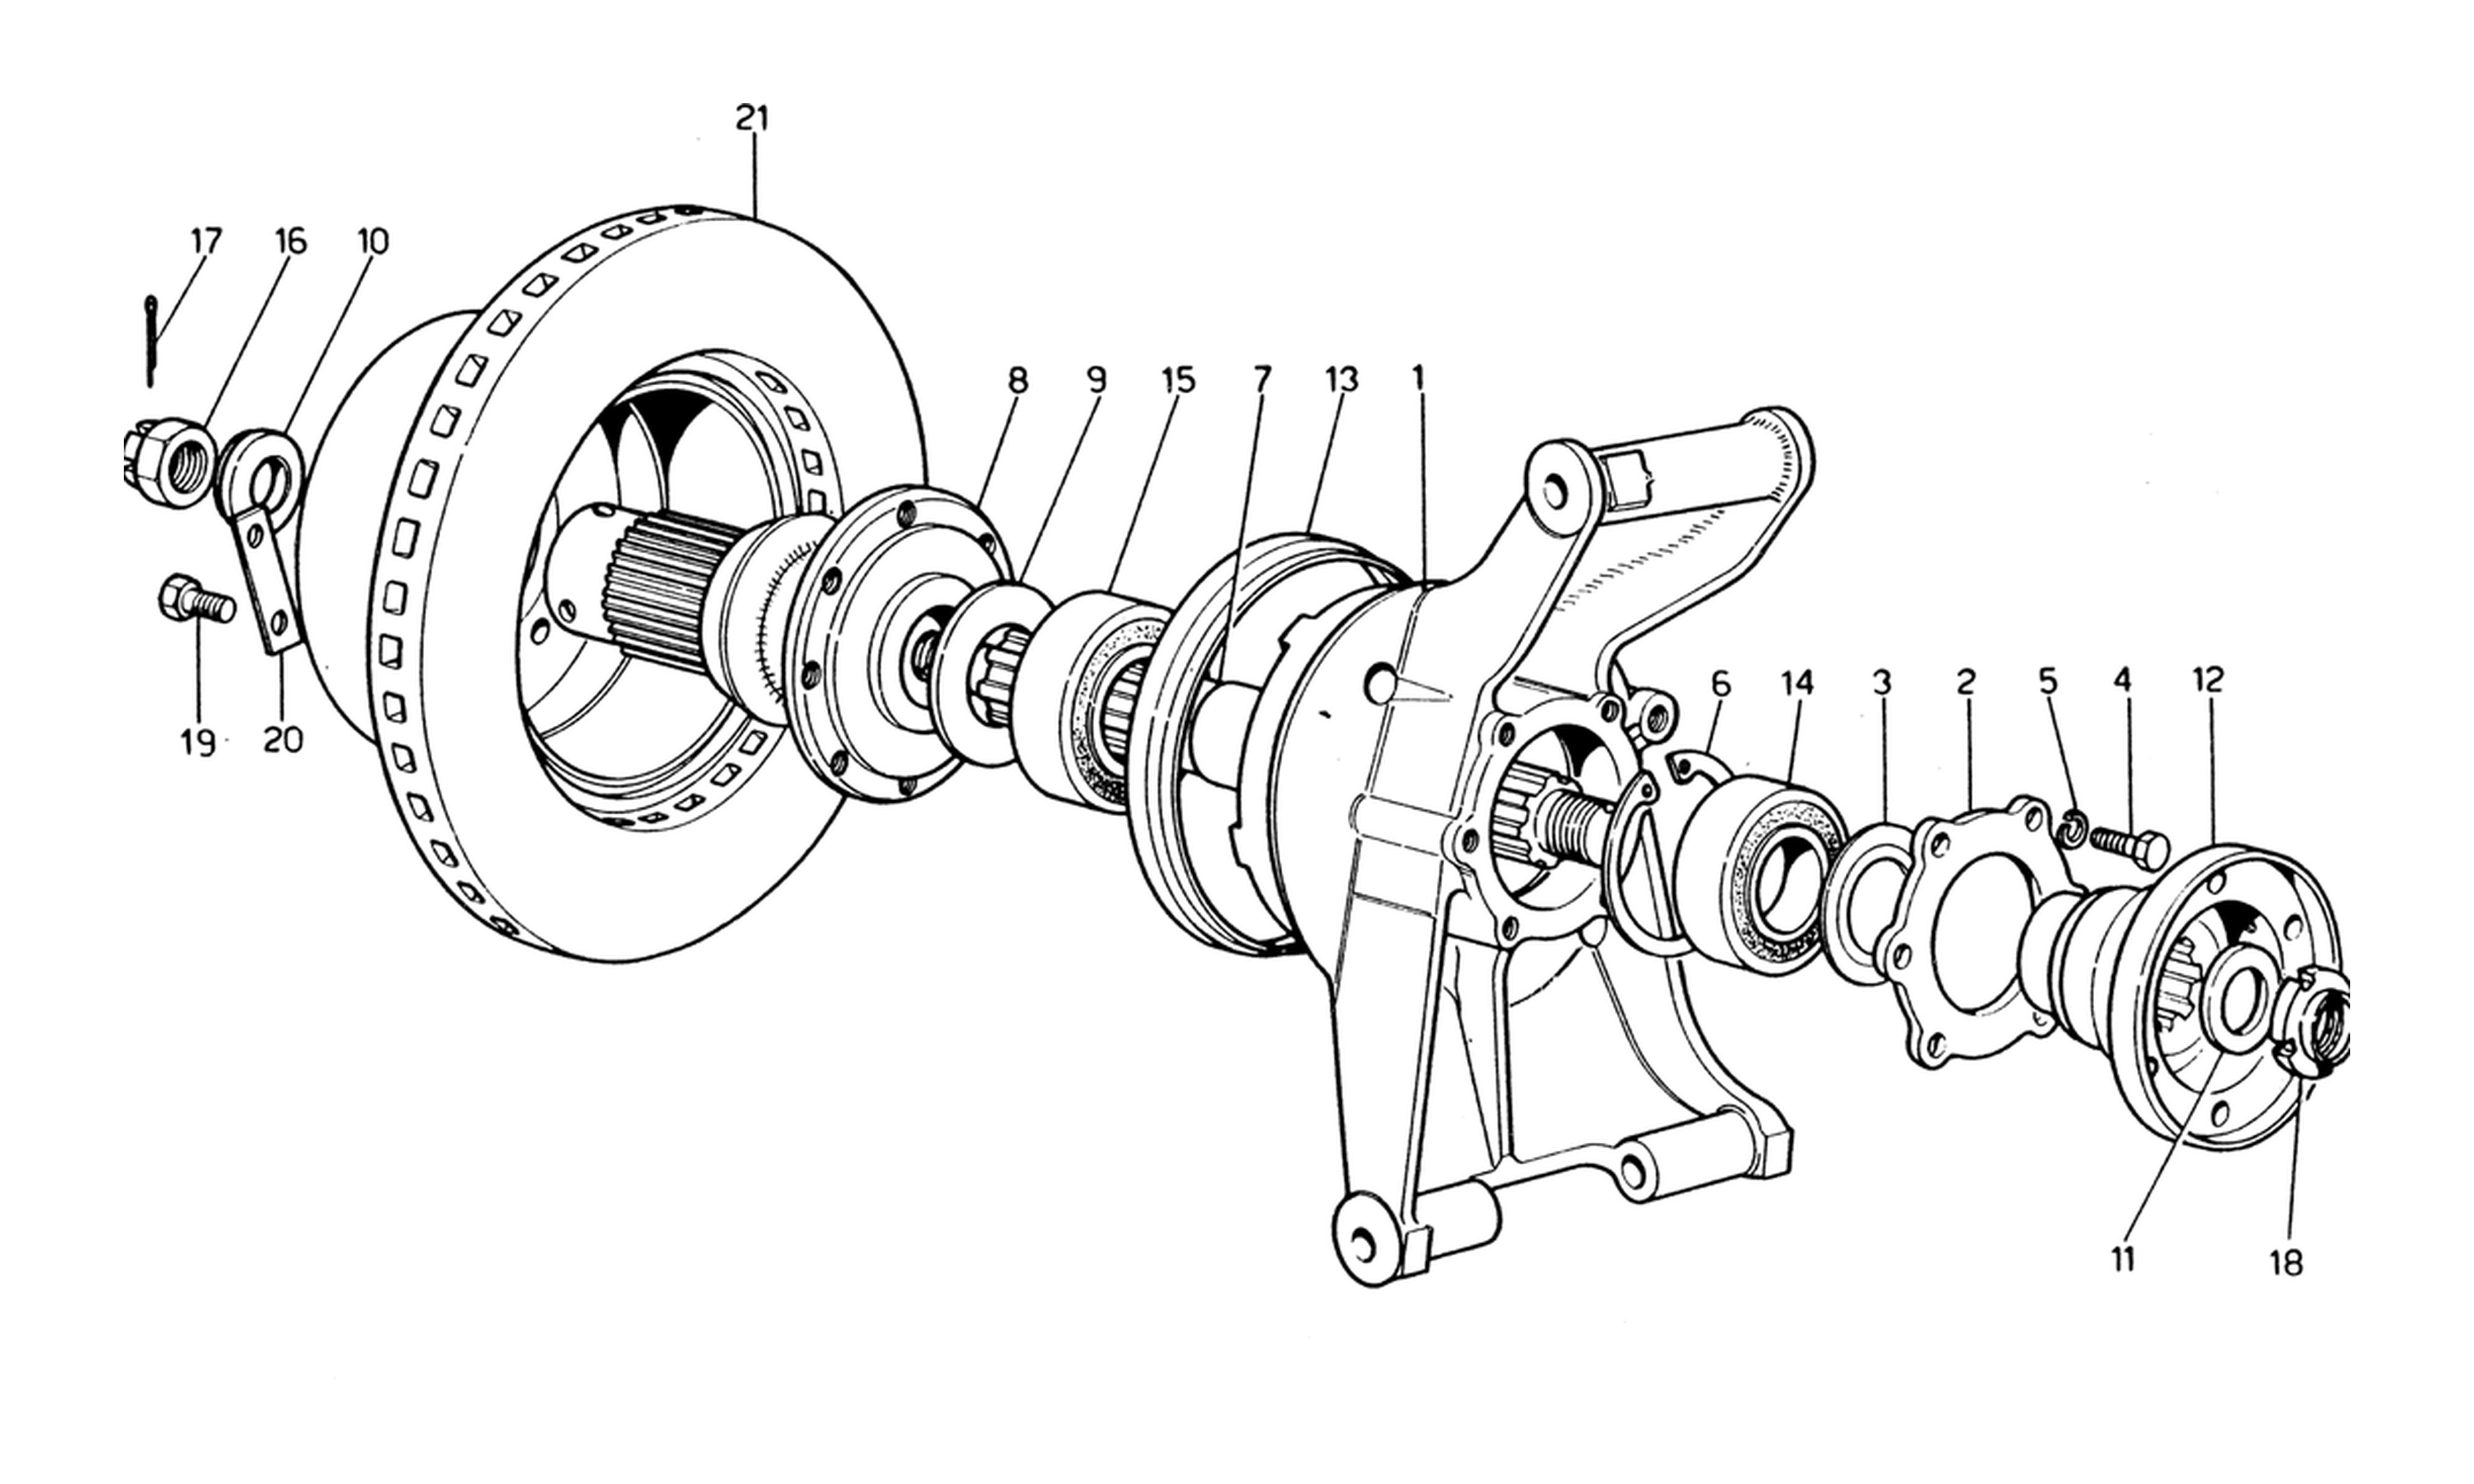 Schematic: Rear Suspension And Brake Disc